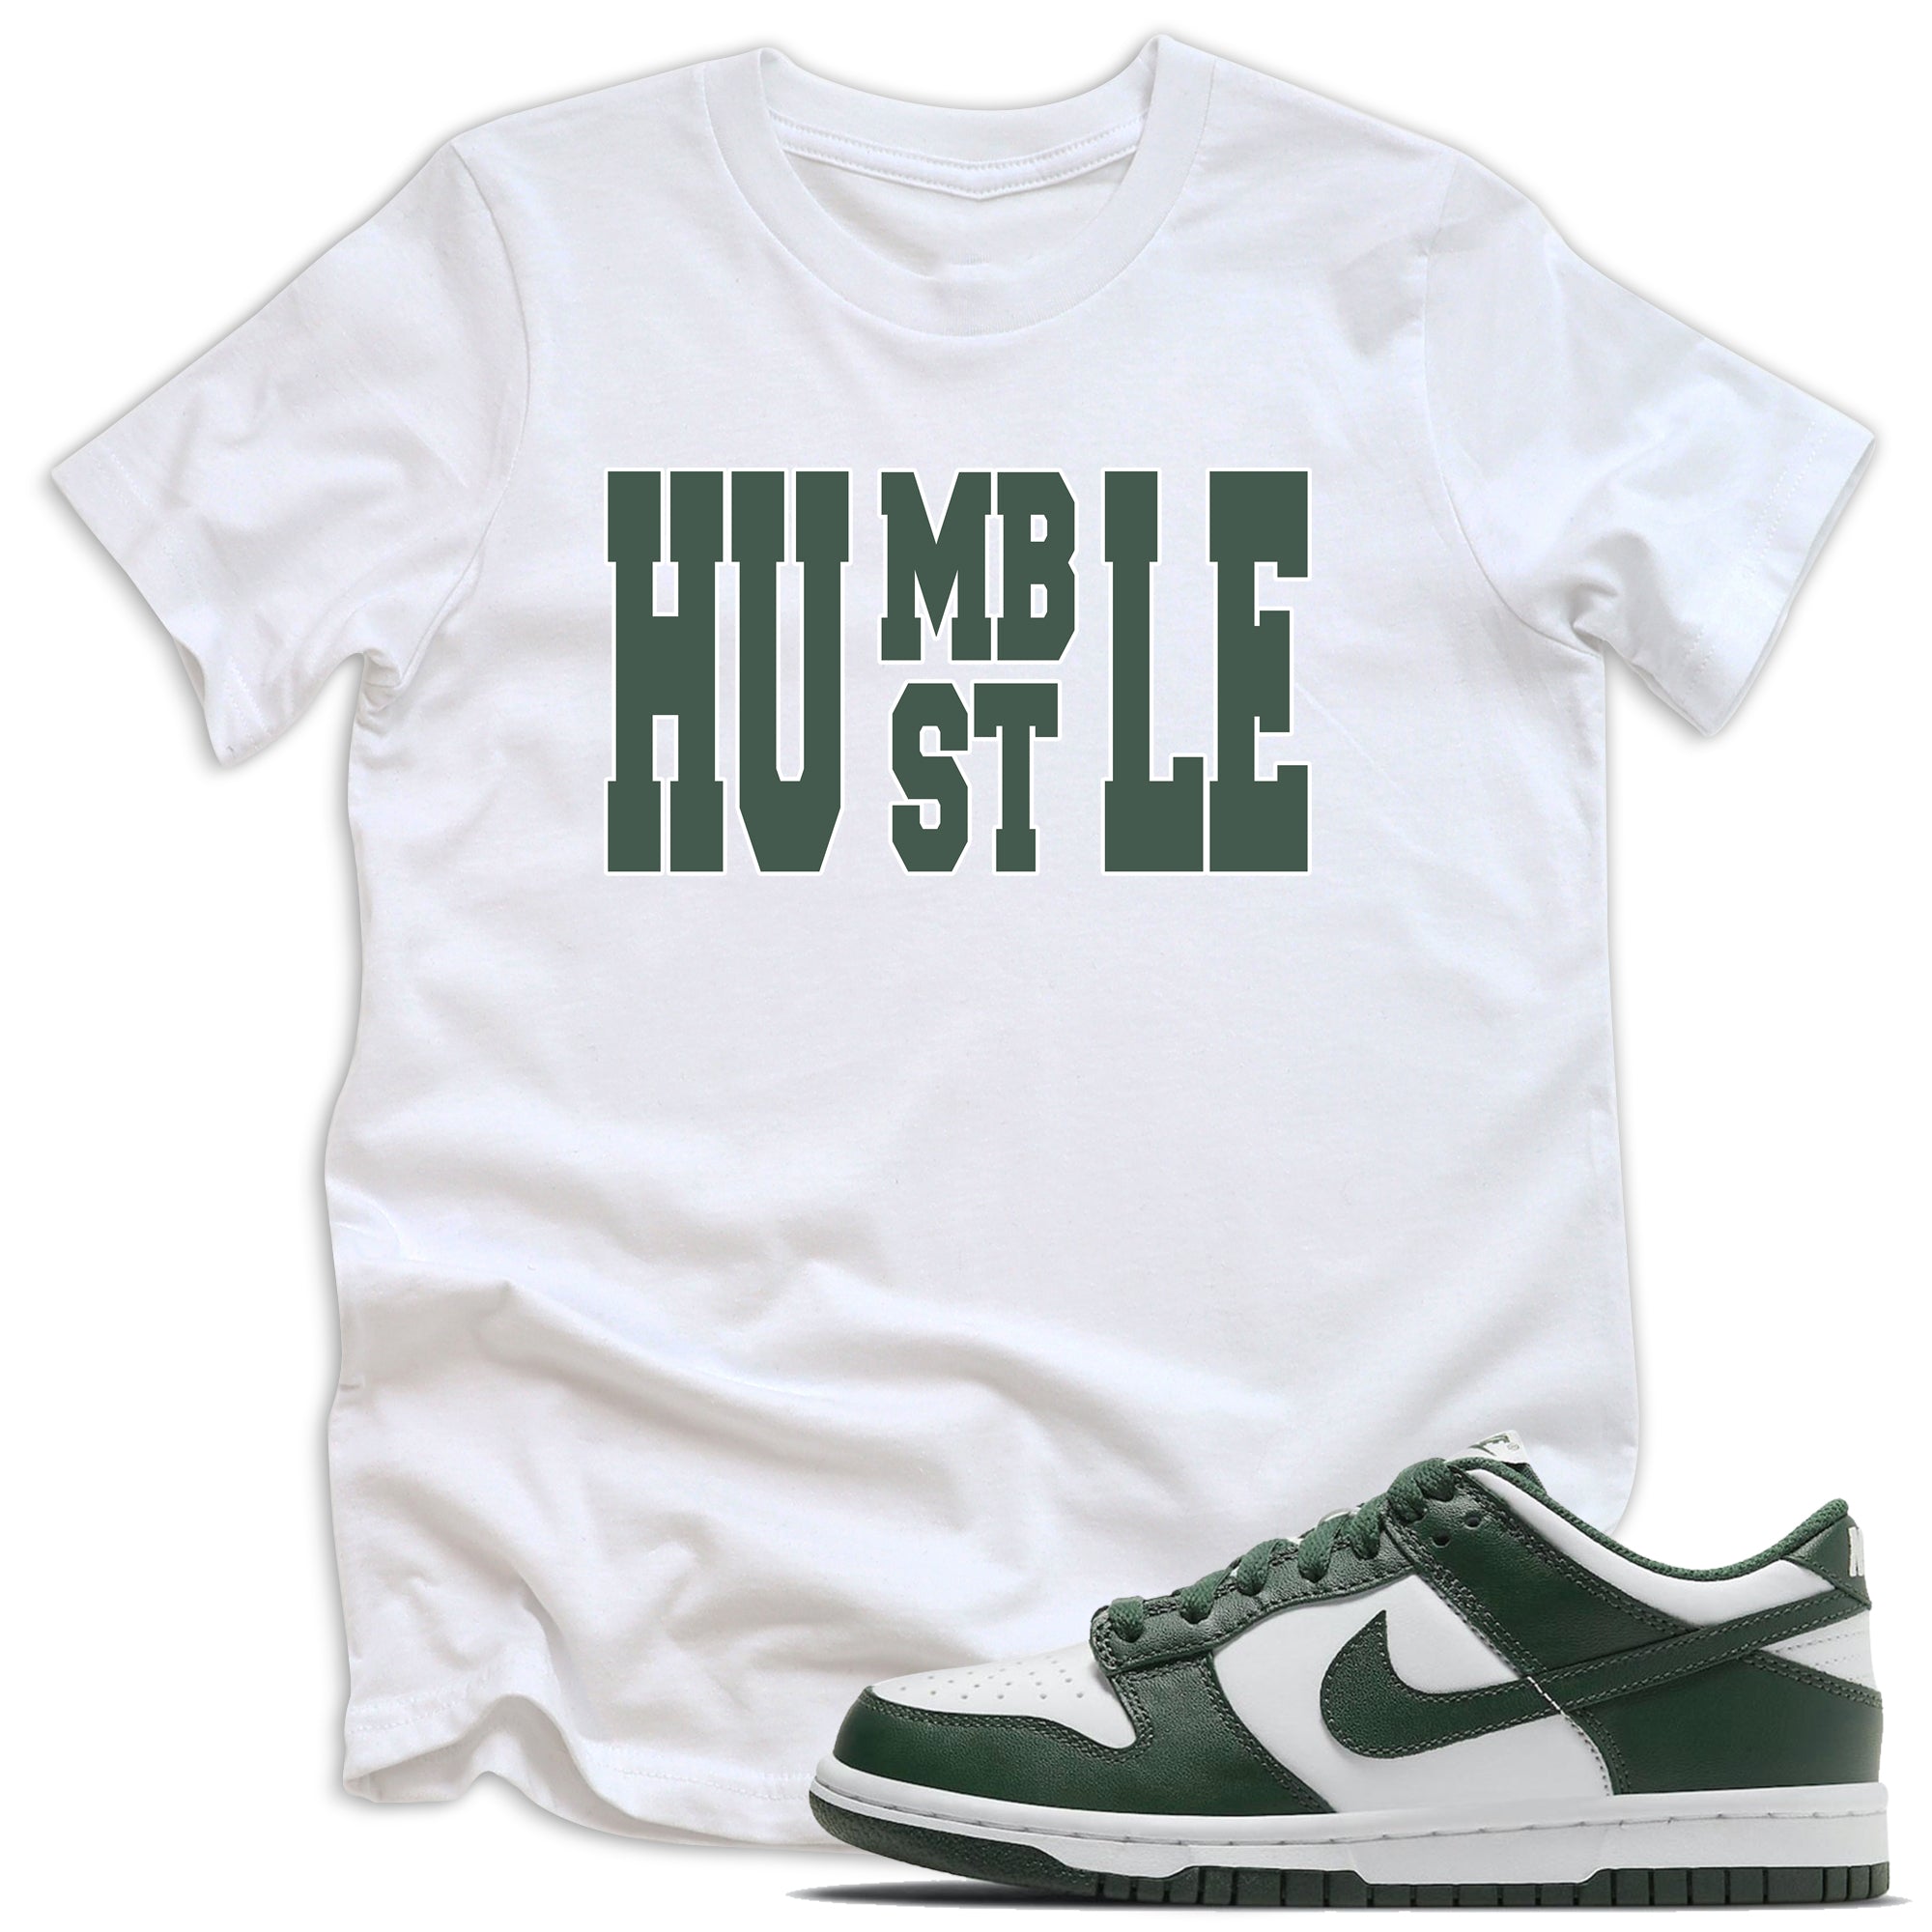 Humble Hustle Shirt Nike Dunk Low Michigan State GS photo